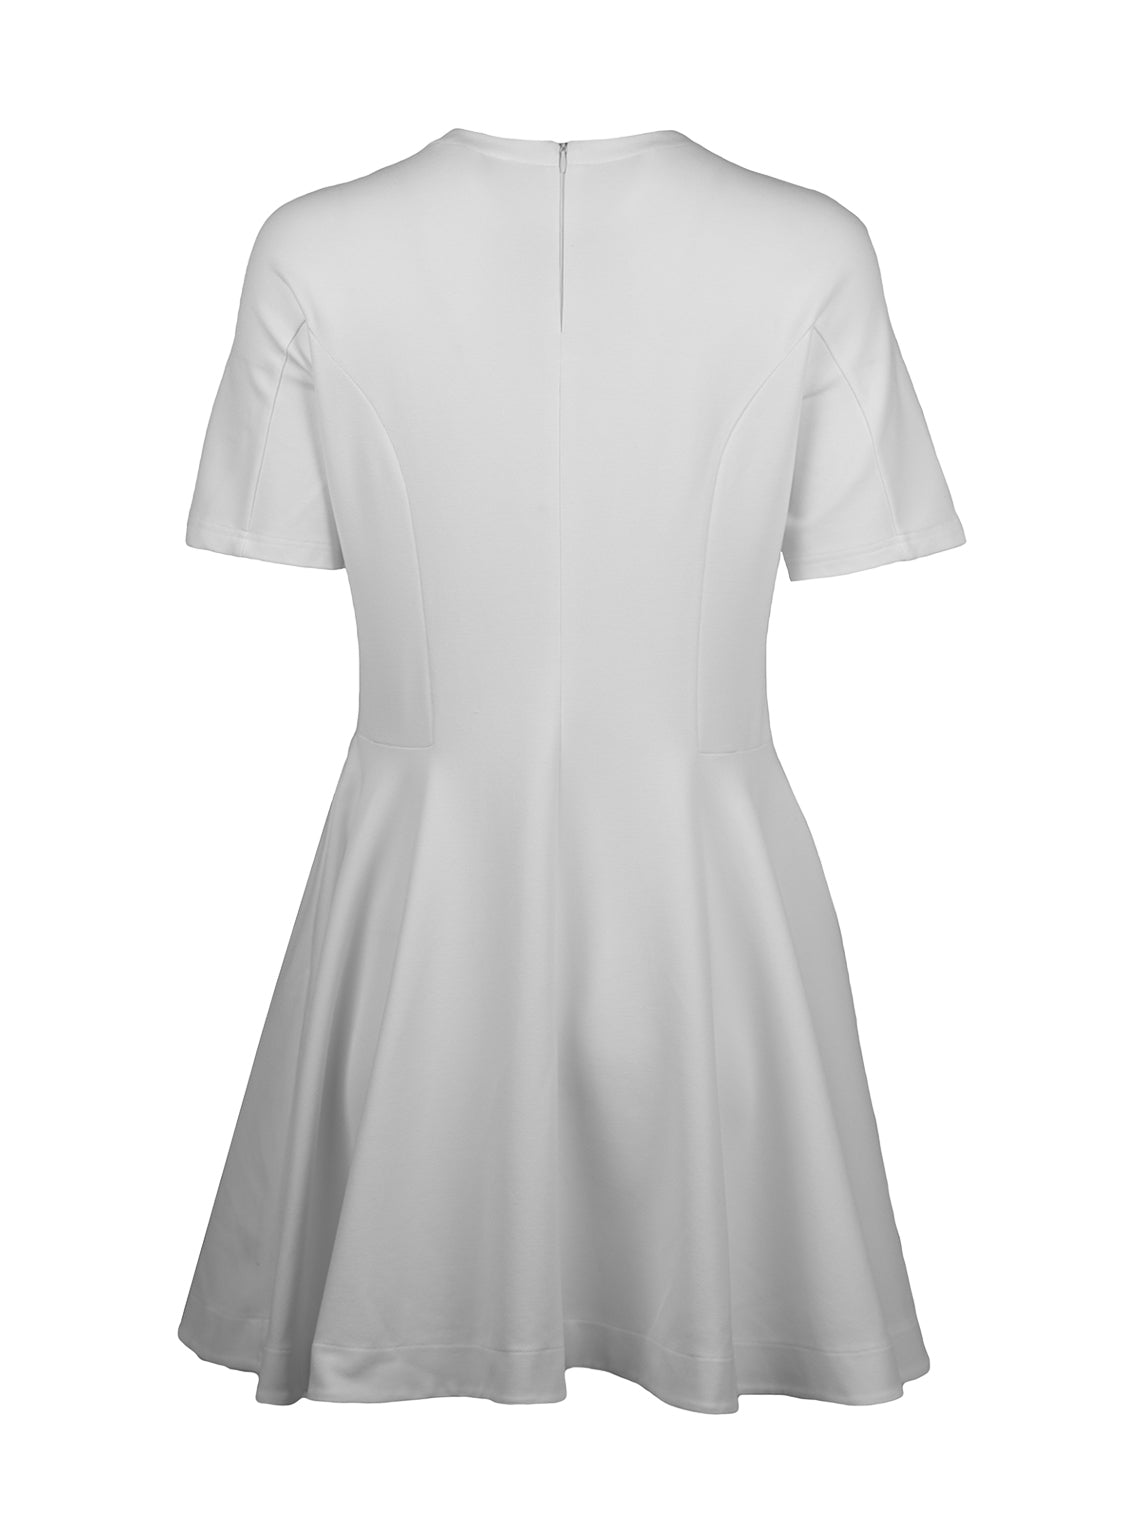 Tailliertes Kleid aus festem Baumwolle-Mix, hochgeschlossenem Rundhalsausschnitt sowie Reißverschluss an der Rückseite